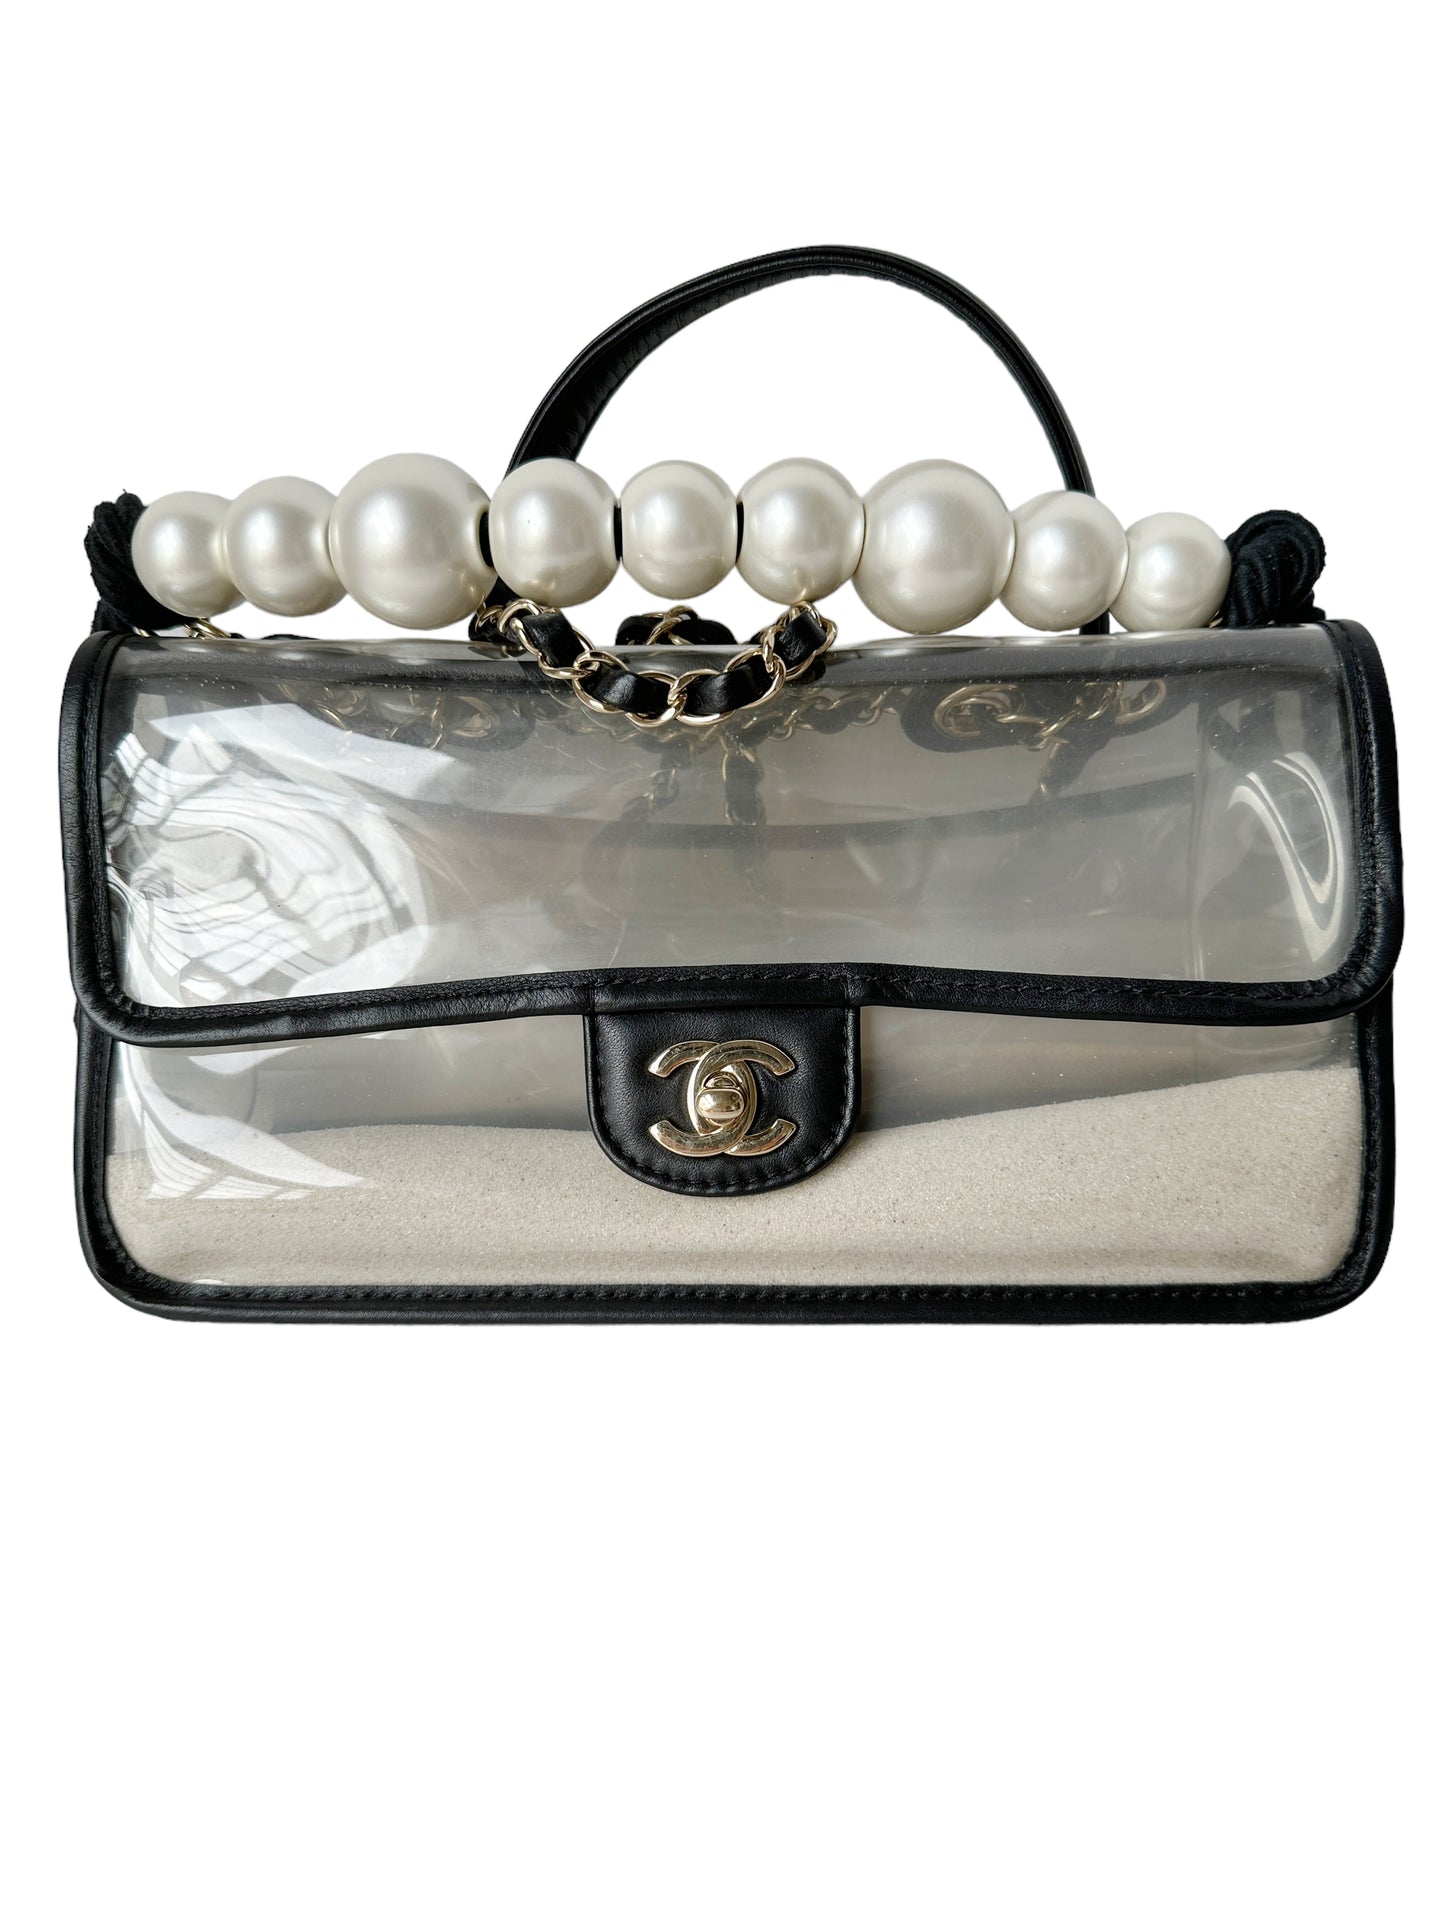 chanel clear handbags